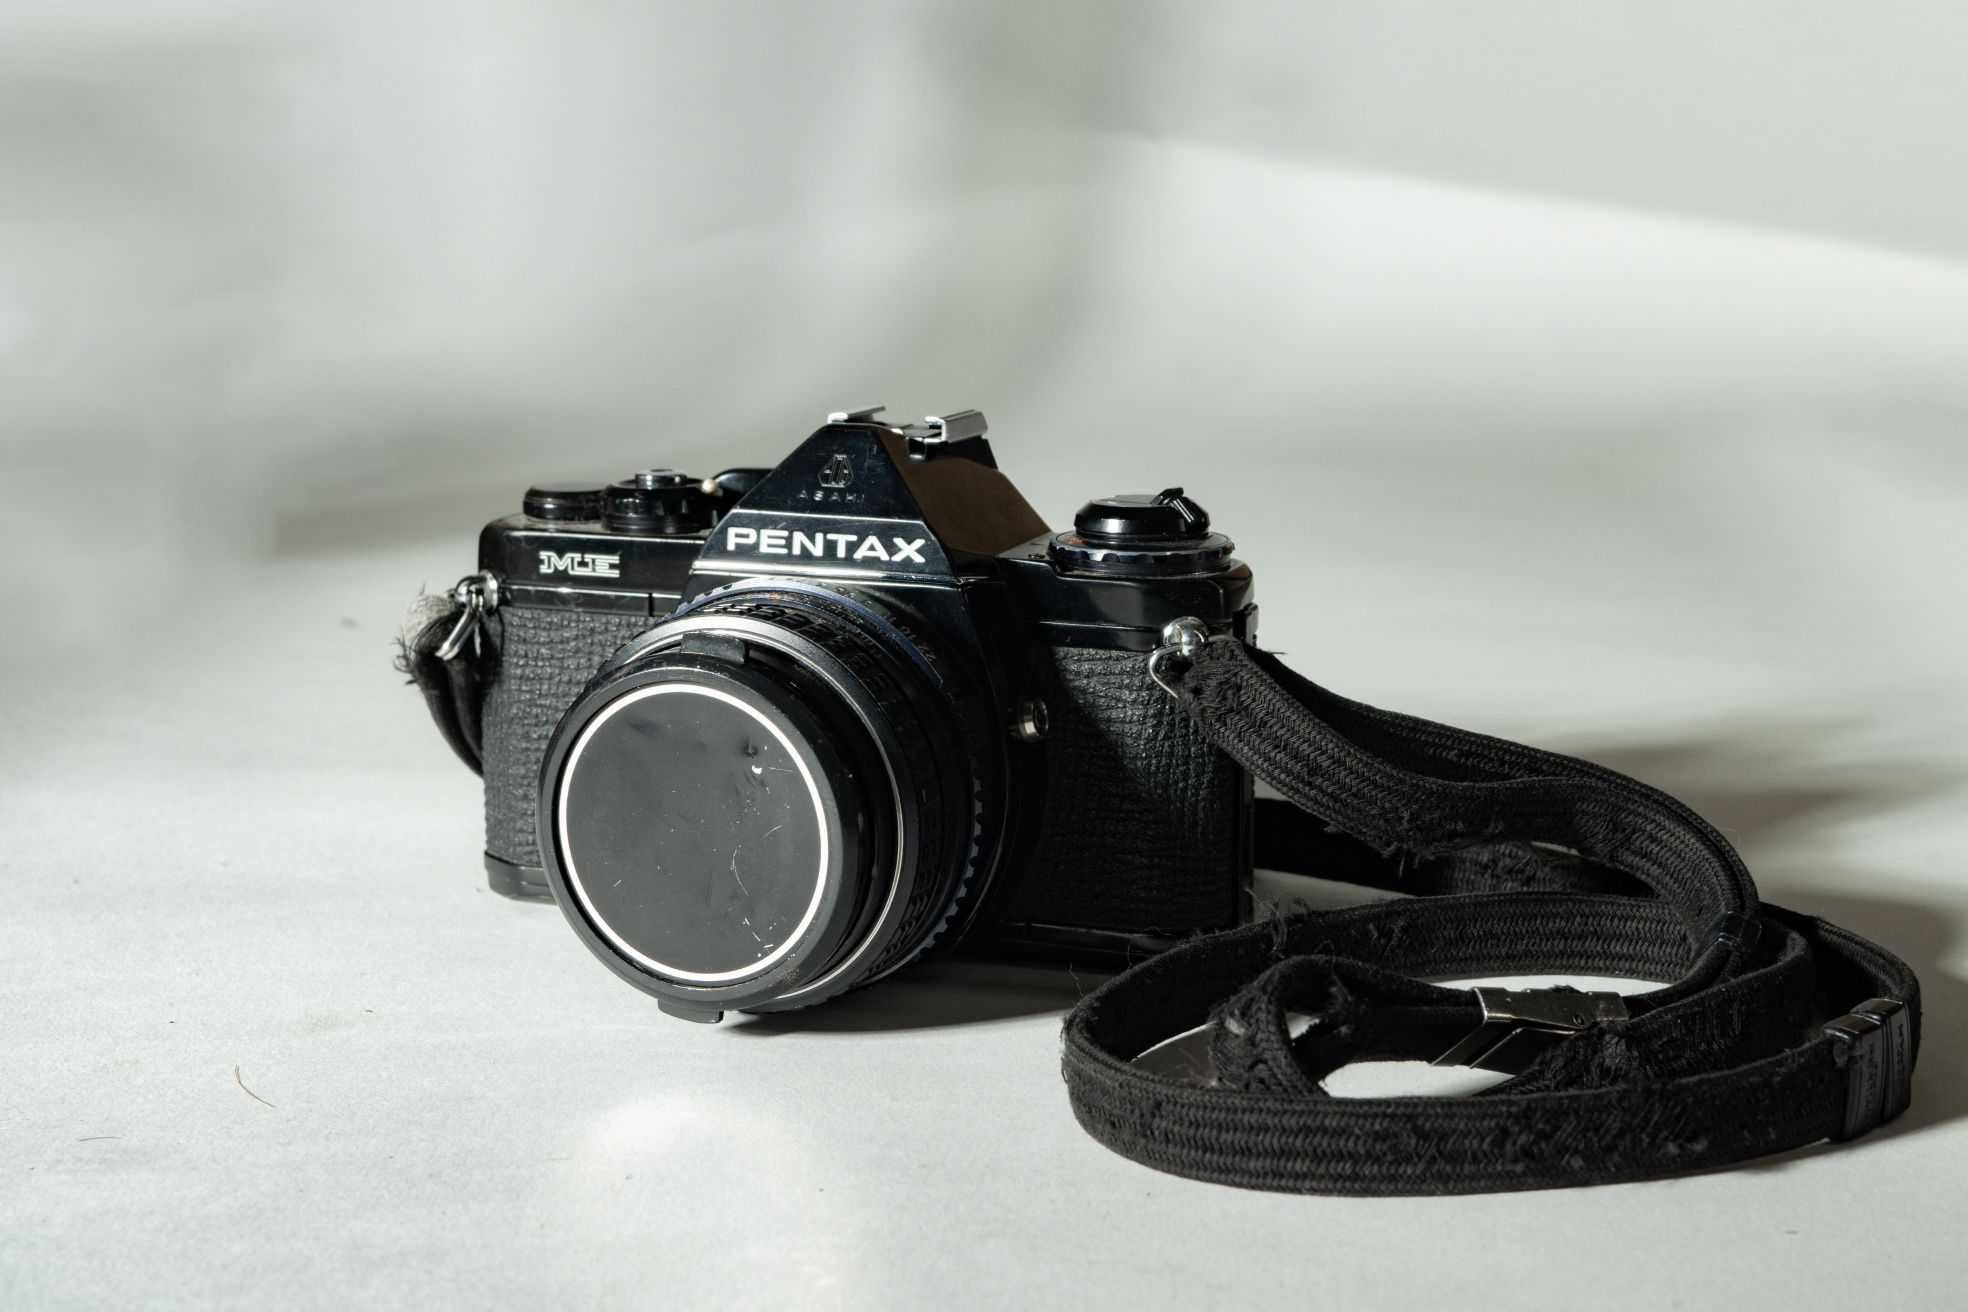 [Excellent+] Pentax ME 35mm SLR Film Camera Black Body w/ 50mm f/1.7 Lens 